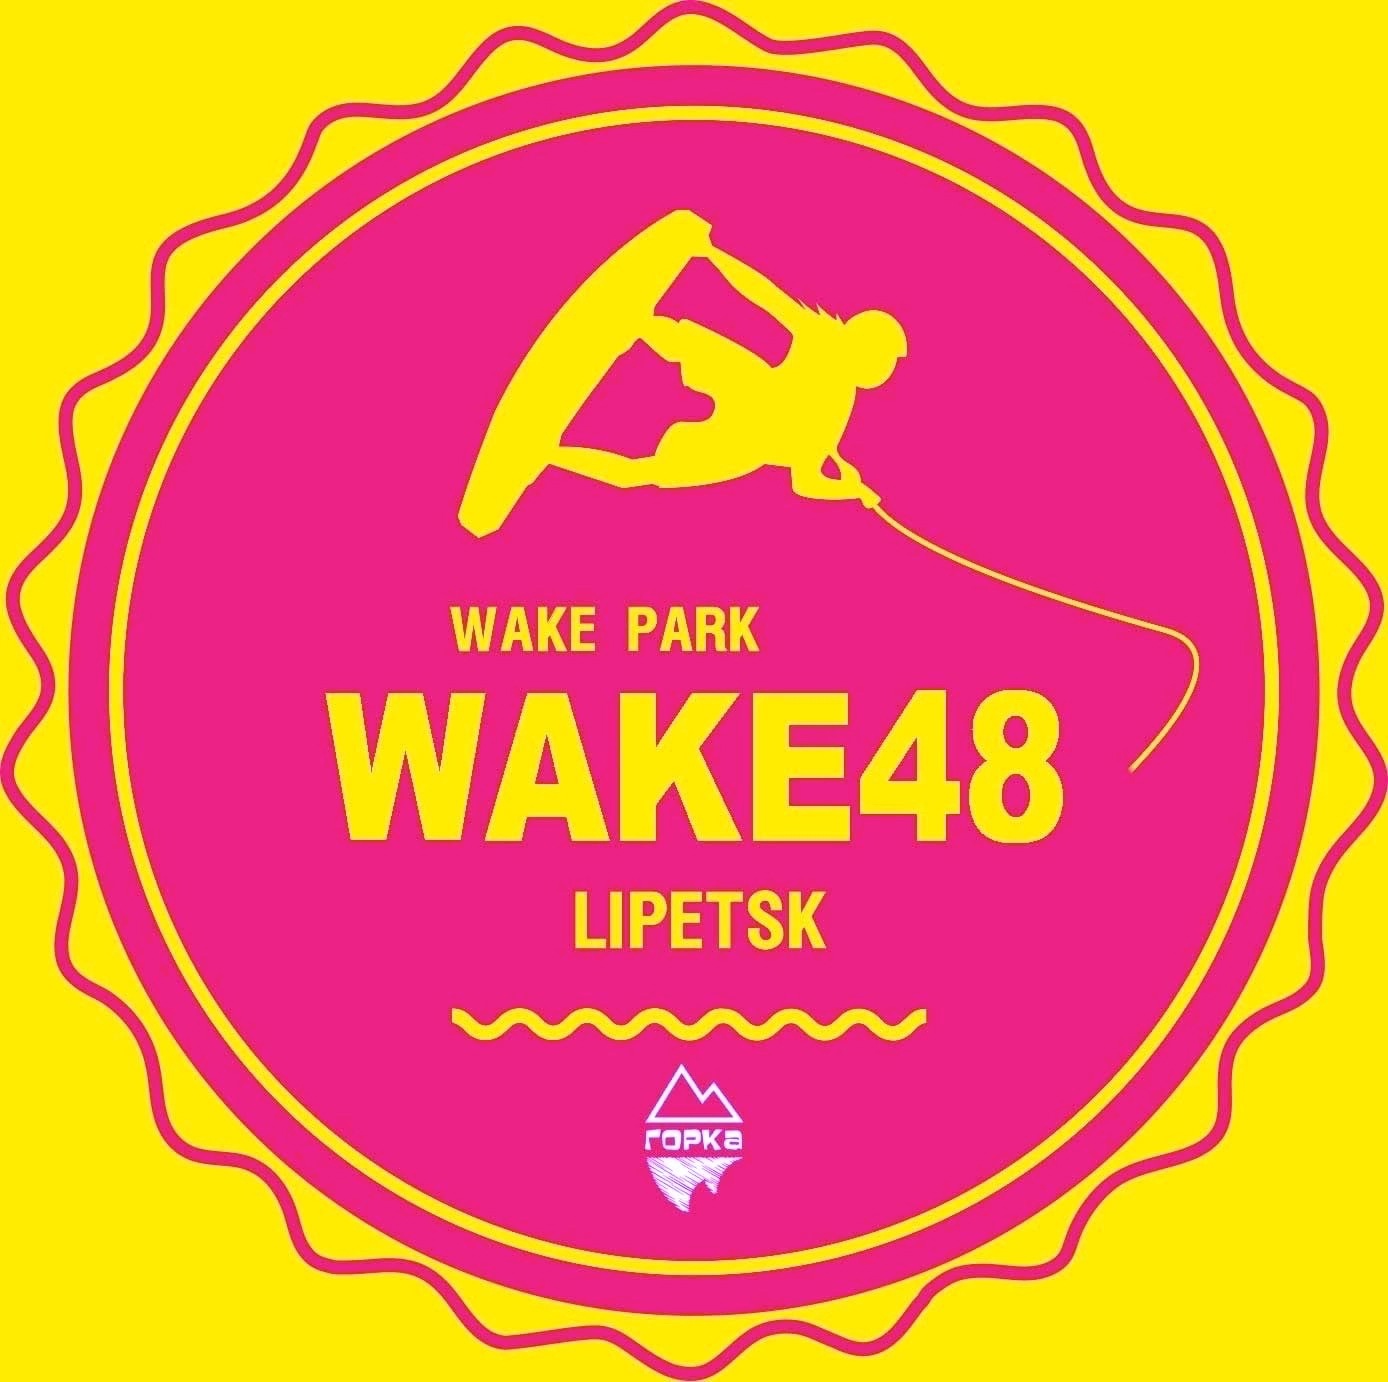 WAKE 48 image